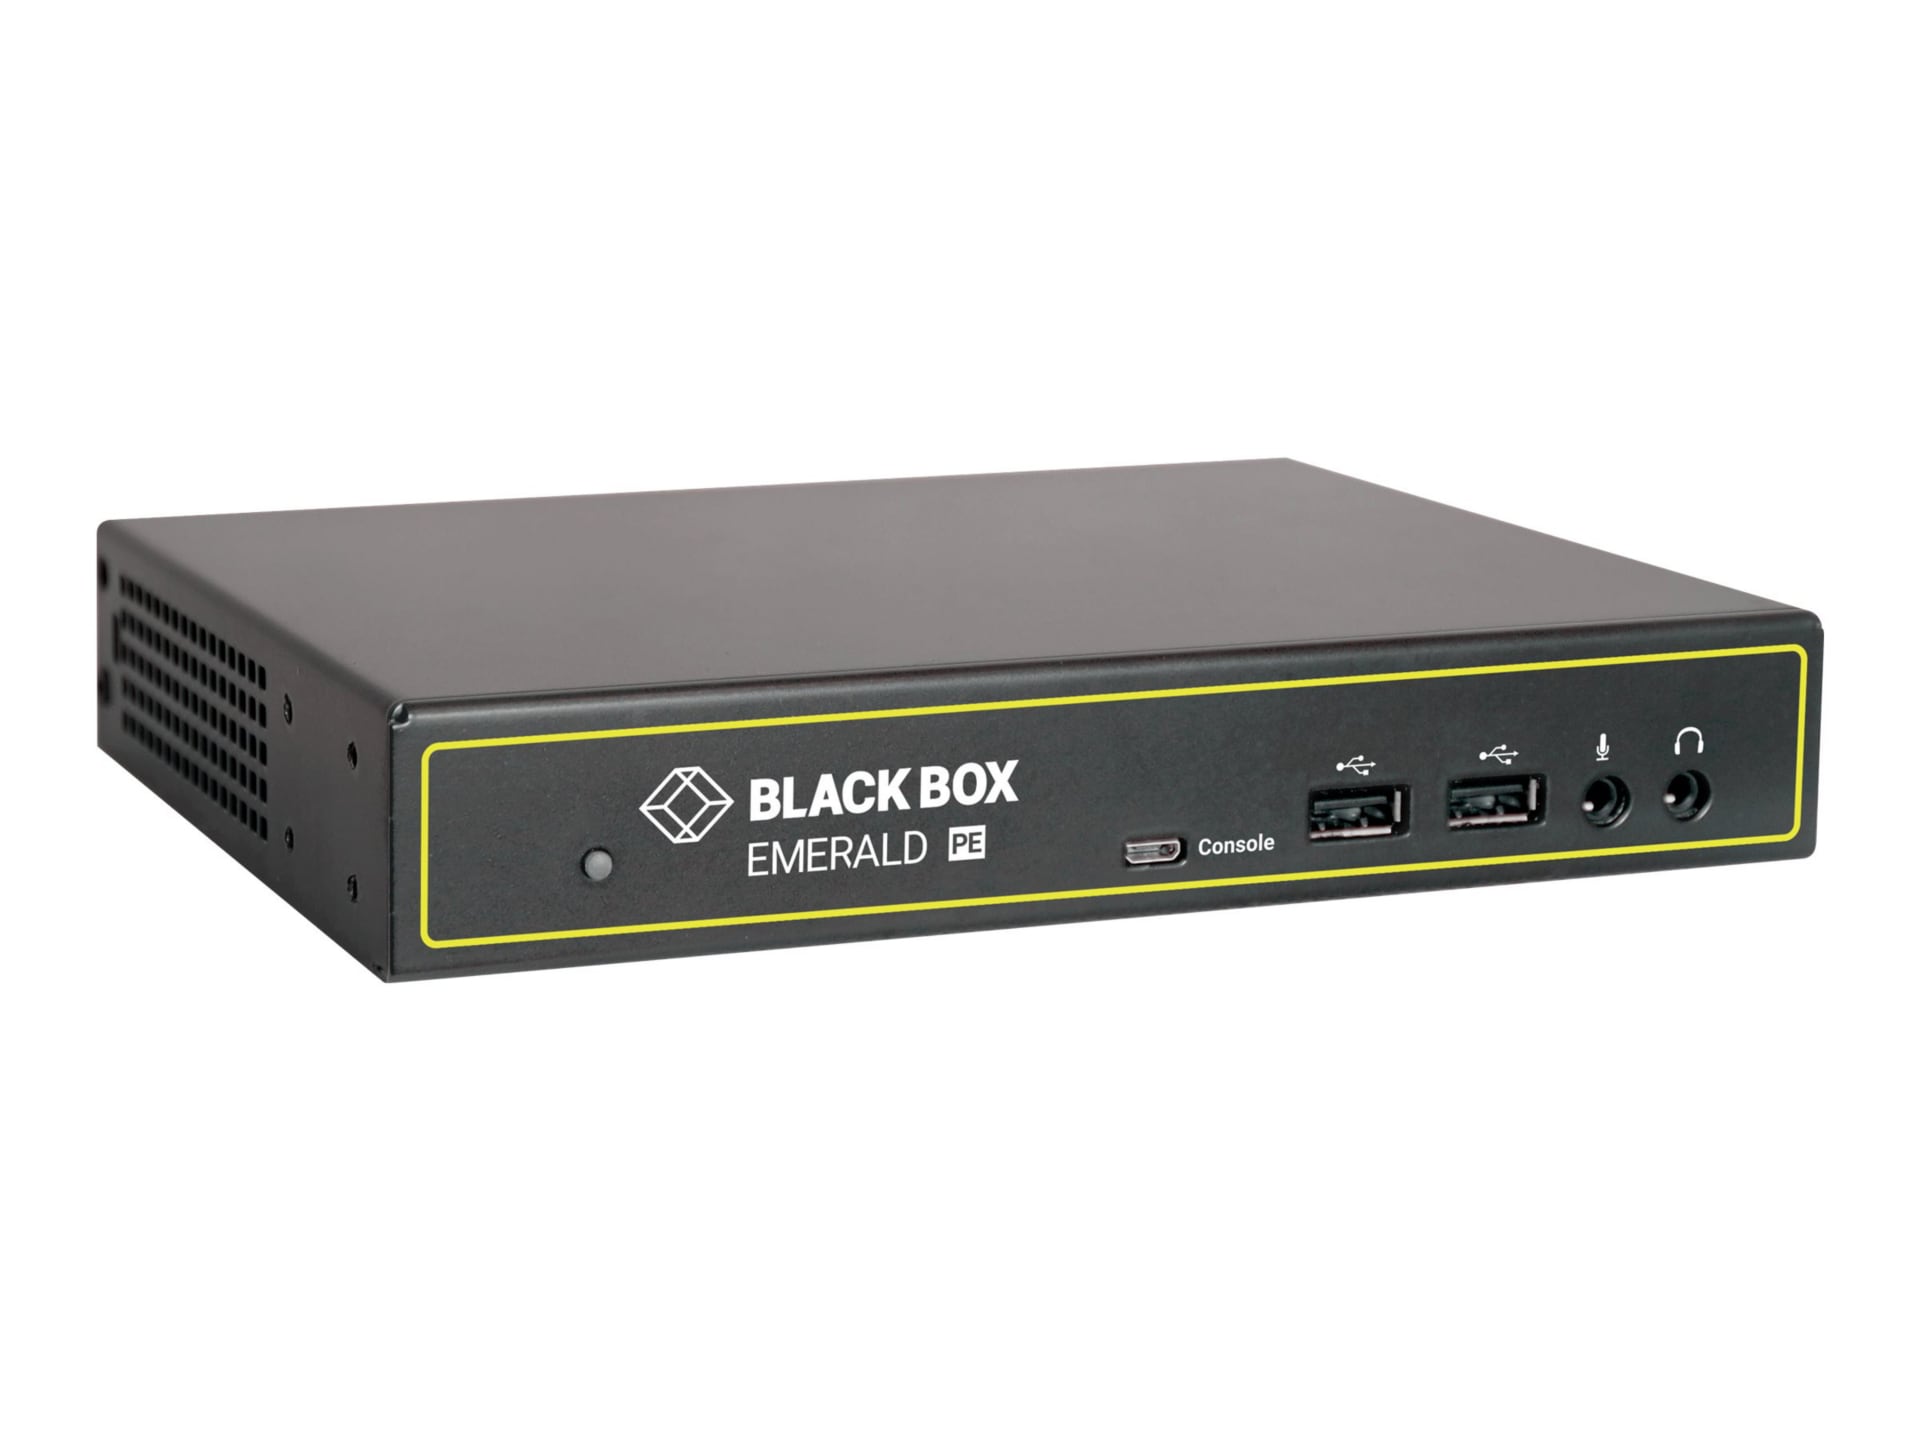 Black Box Emerald PE KVM Extender Receiver with Virtual Machine Access - Du